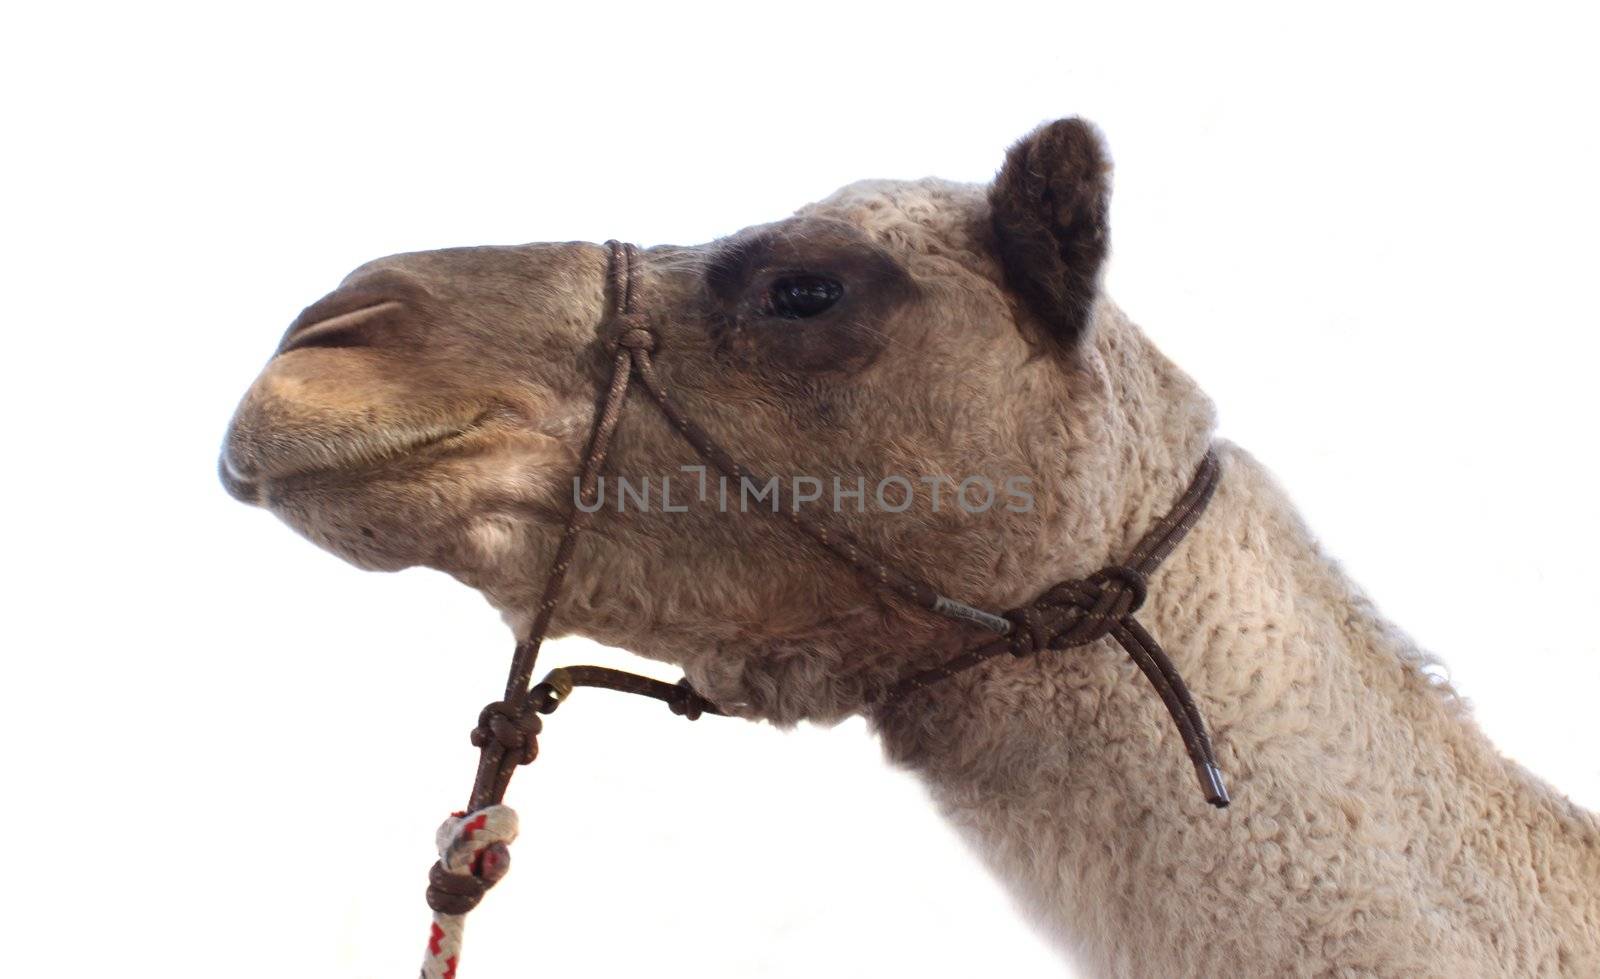 Shot of a light brown single hump camel